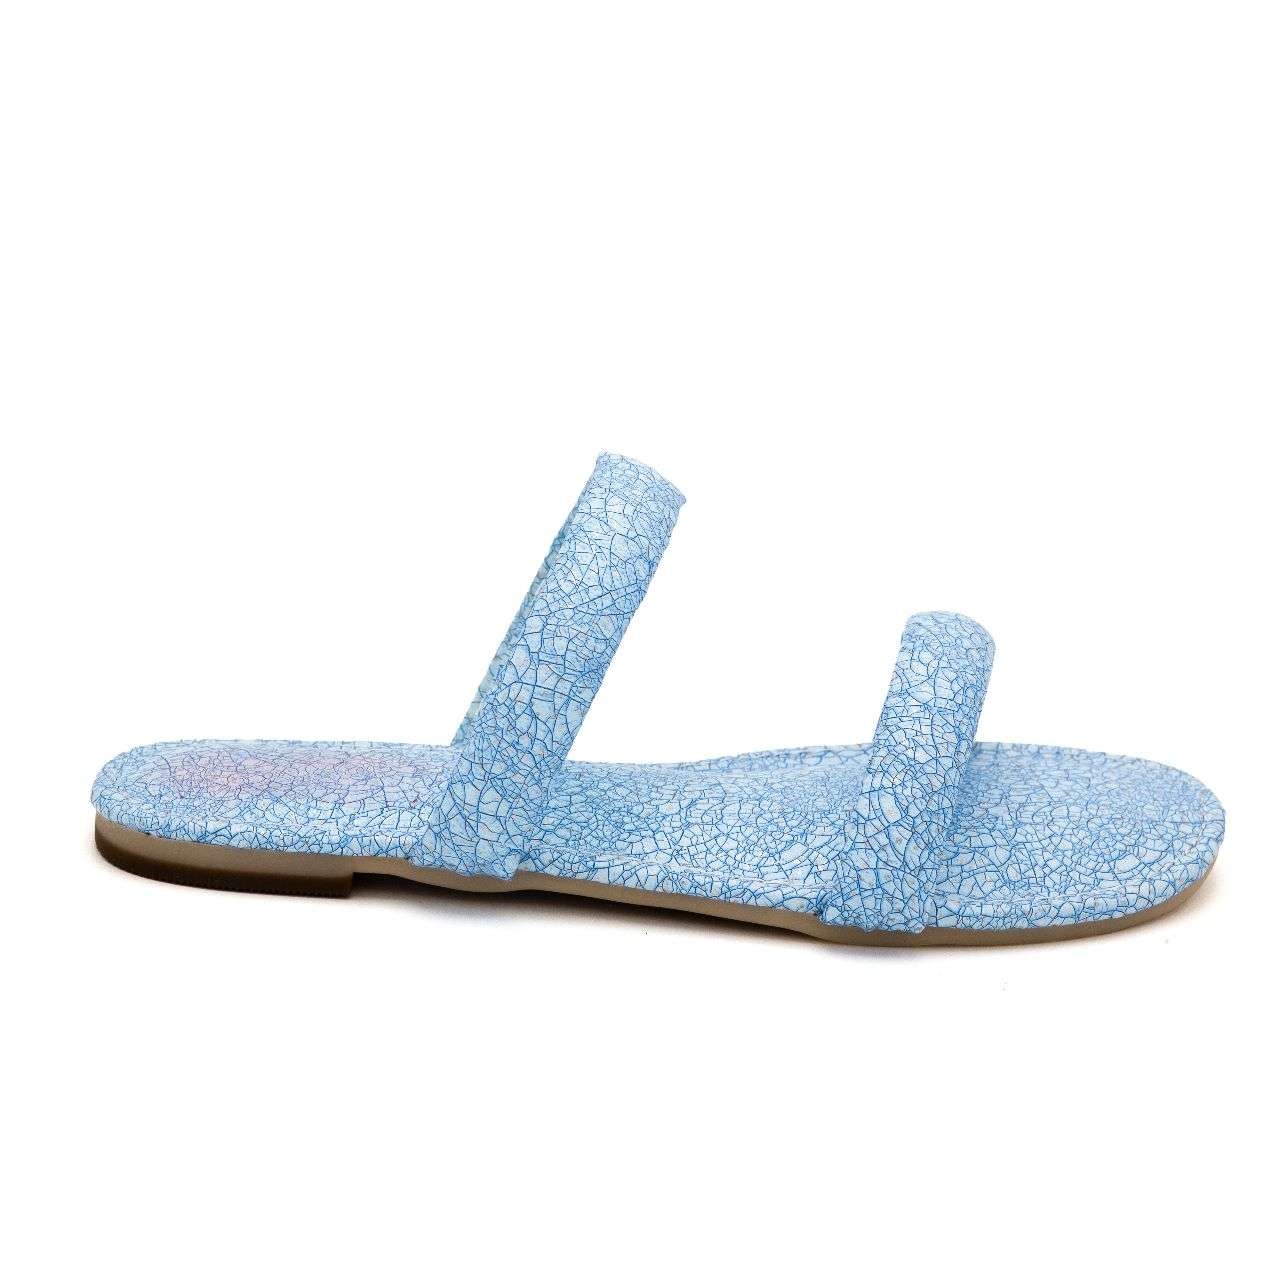 Cilo flat slipper